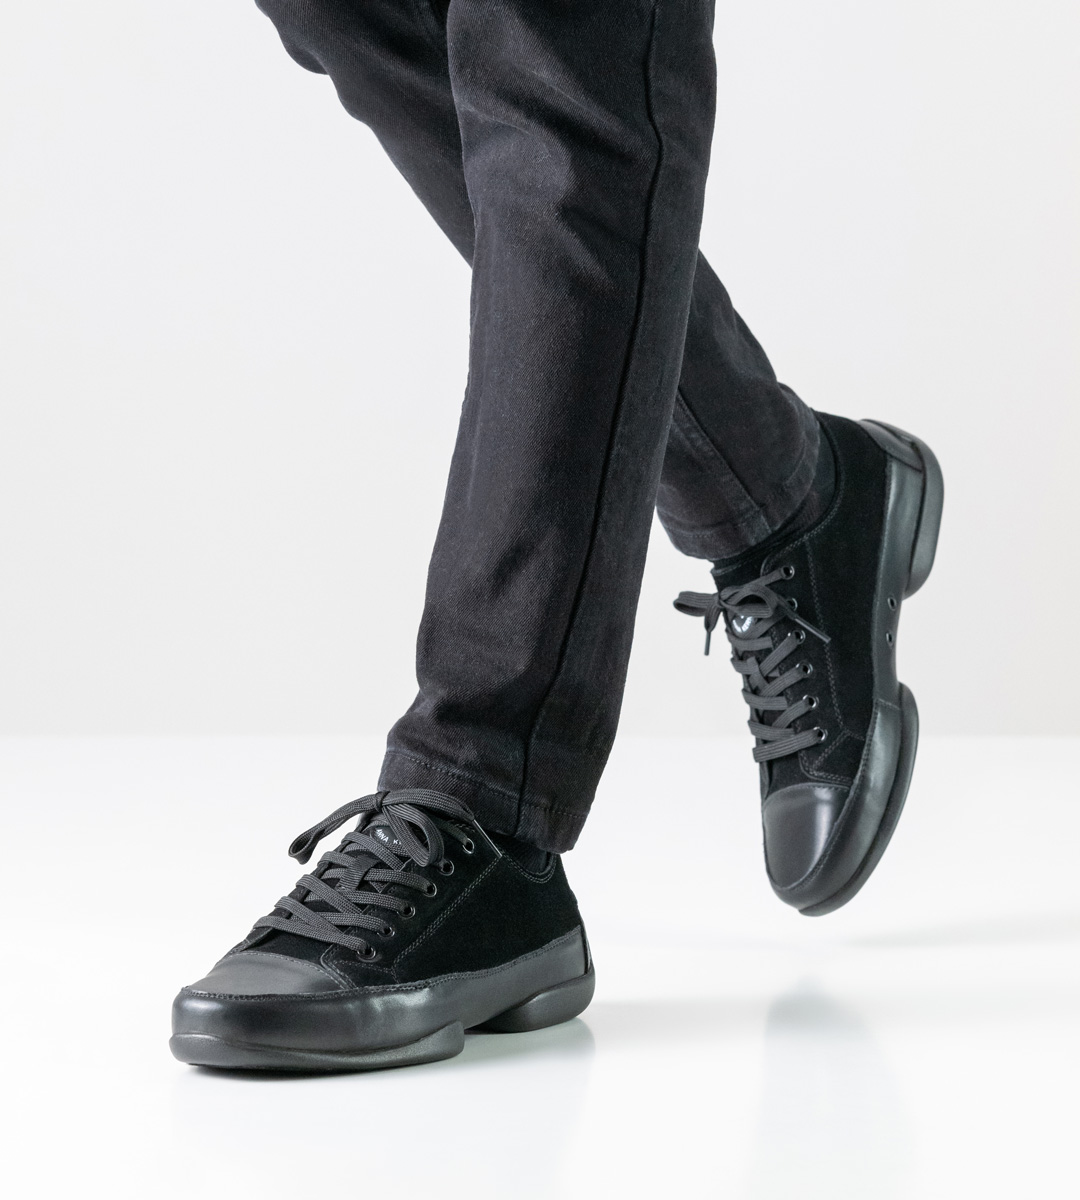 black men's dance shoe sneaker with split sole by Suny in combination with black jeans